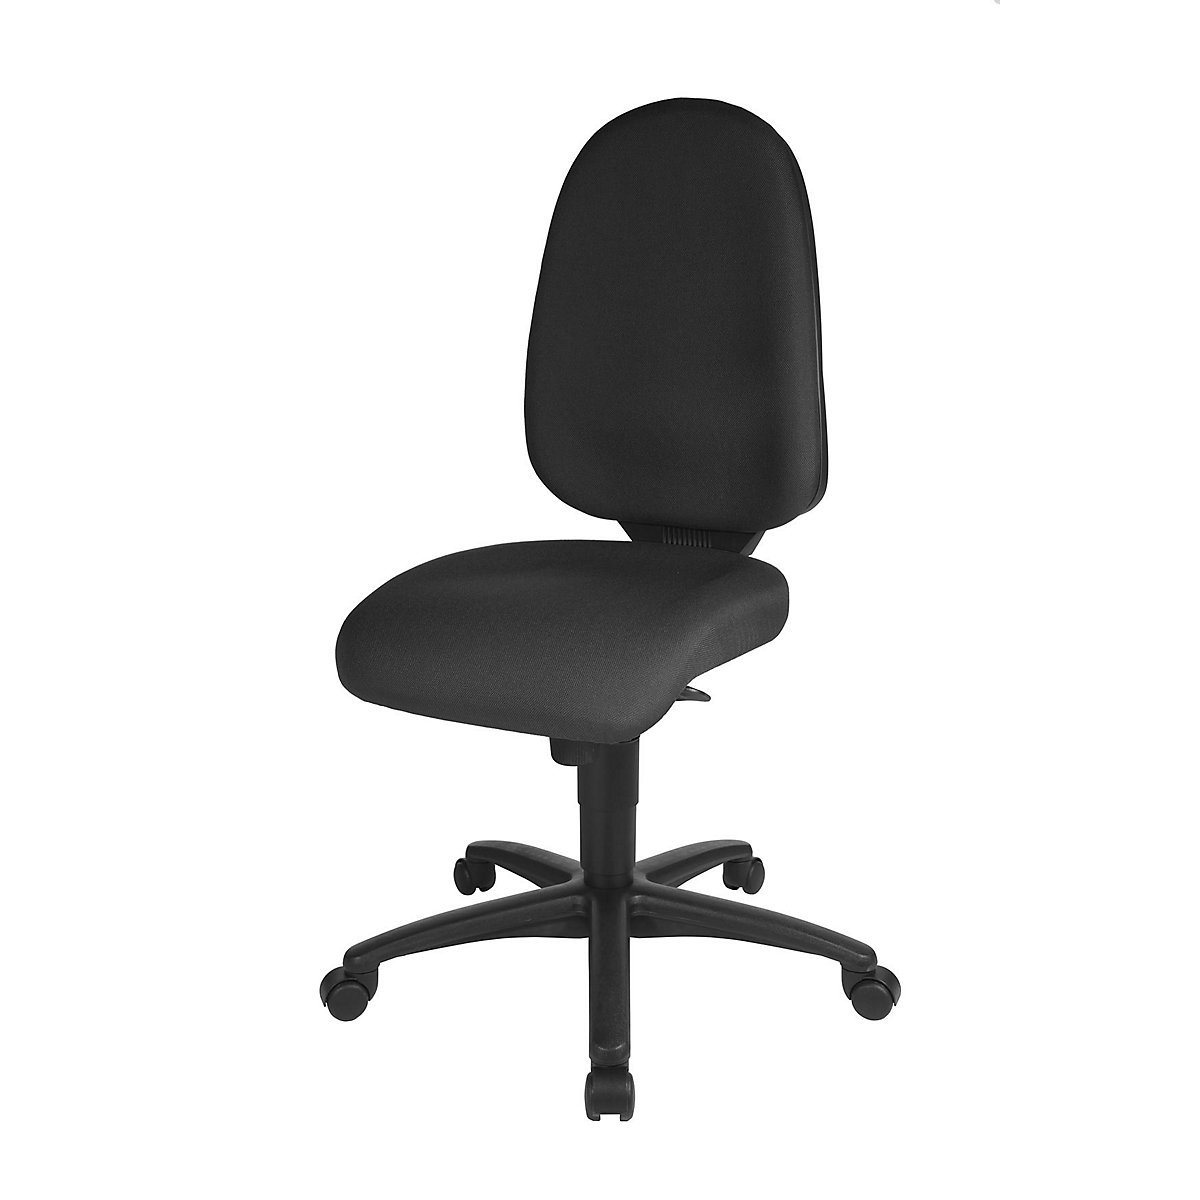 Ergonomic swivel chair, synchronous mechanism, ergonomic seat – Topstar